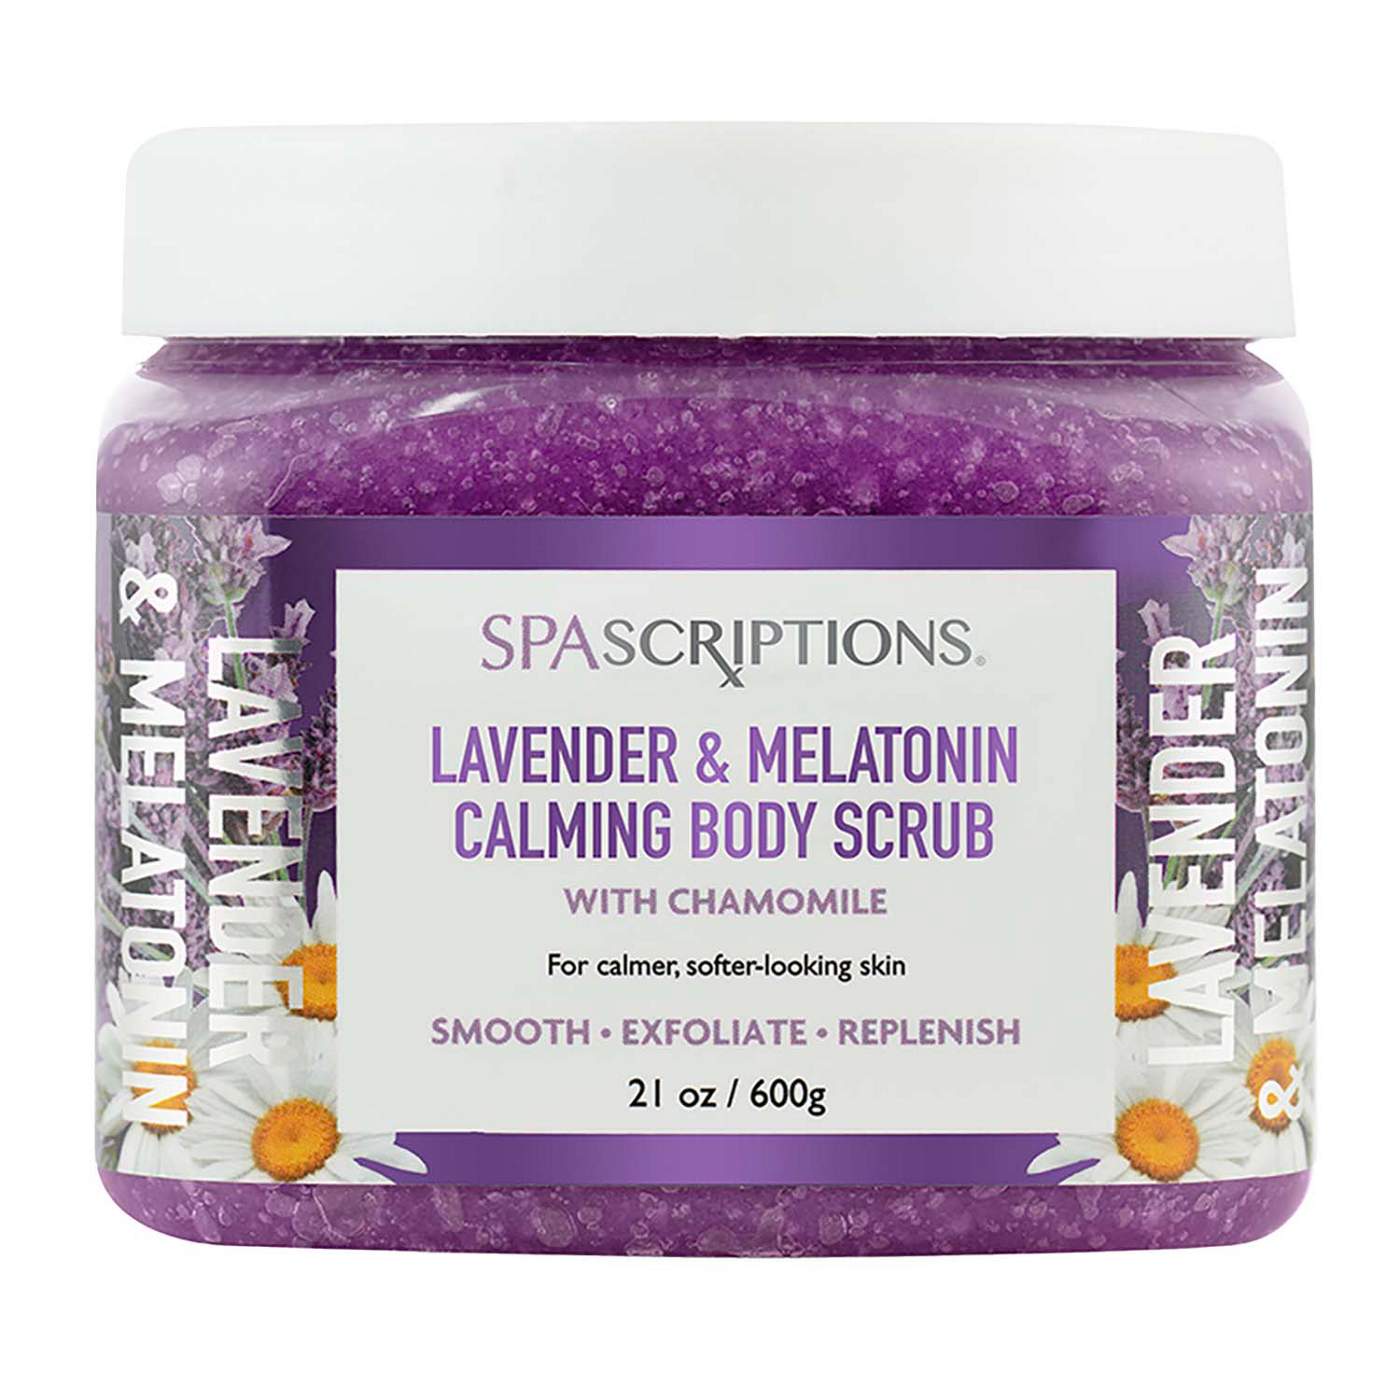 SpaScriptions Calming Body Scrub - Lavender & Melatonin ; image 1 of 5